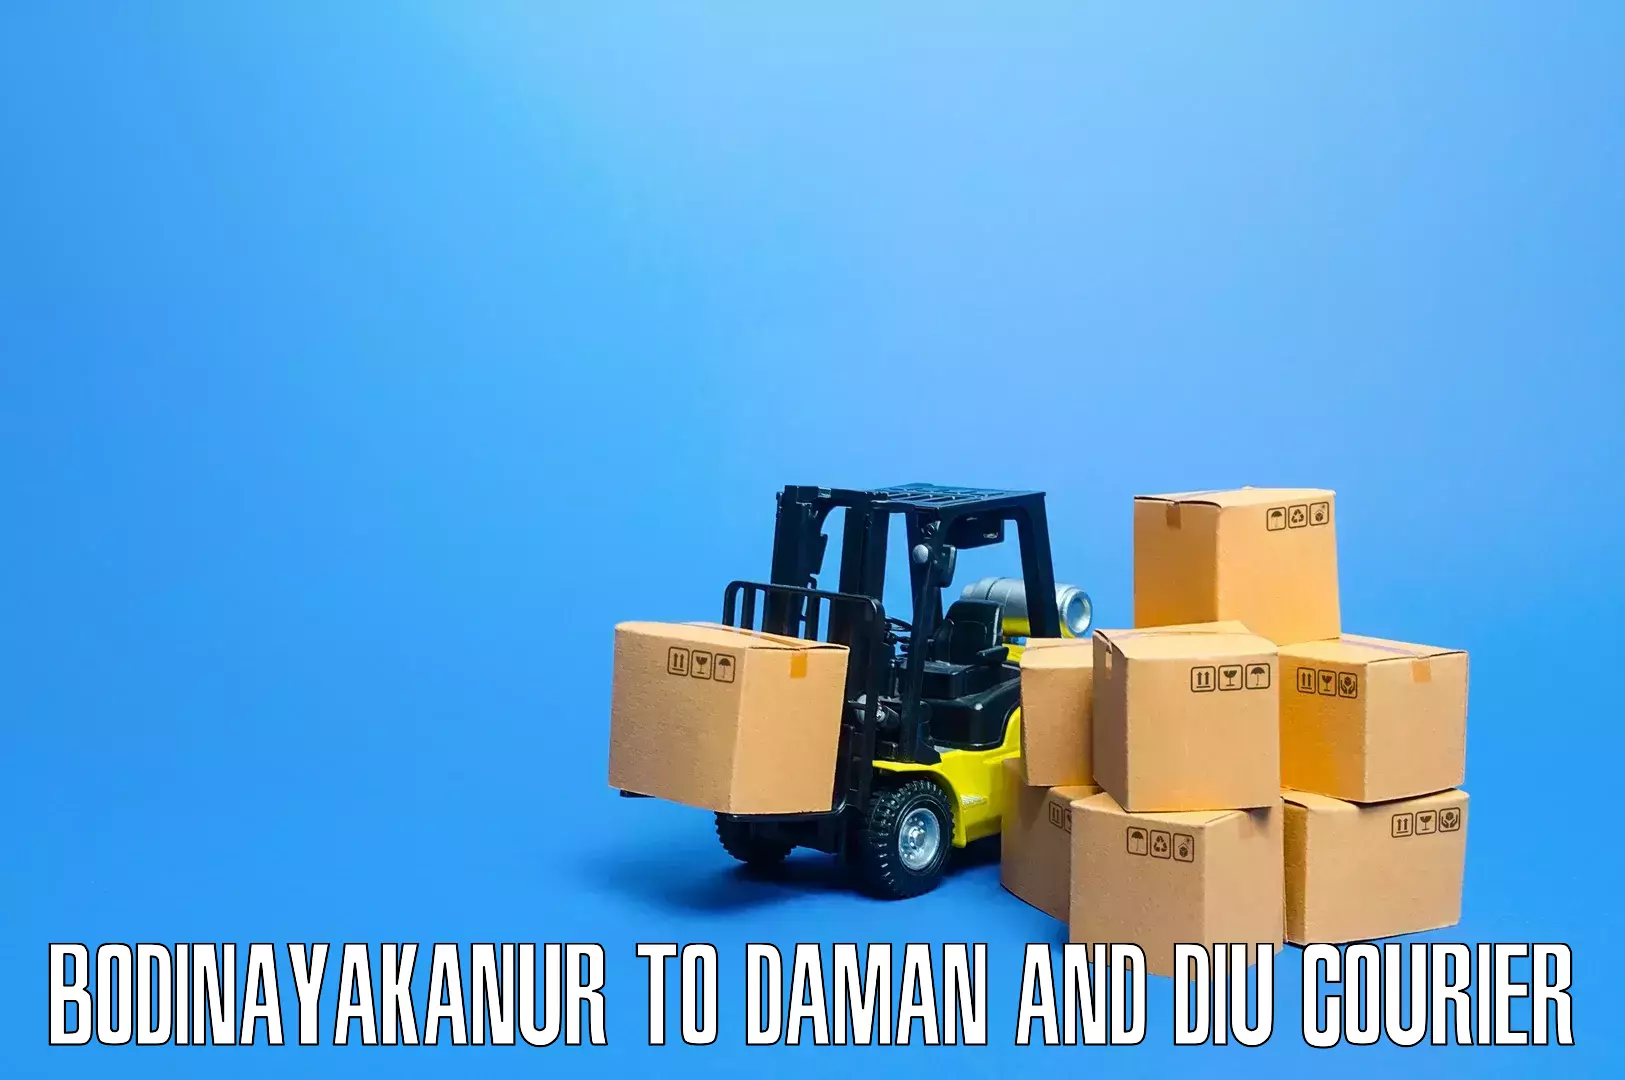 Professional moving company in Bodinayakanur to Daman and Diu